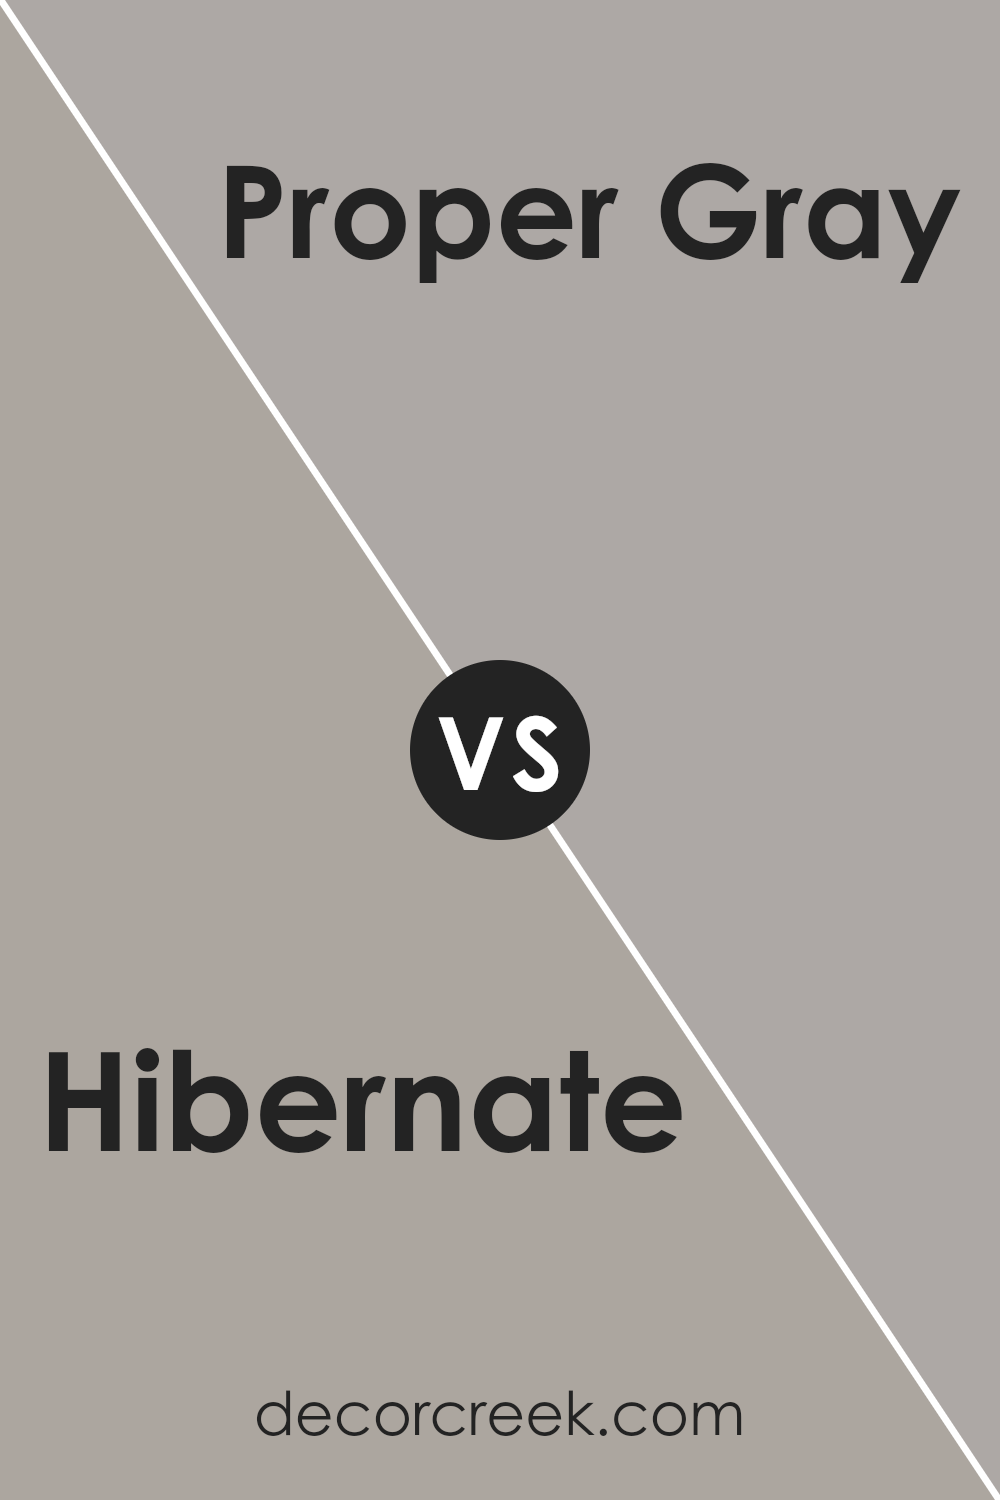 hibernate_sw_9573_vs_proper_gray_sw_6003